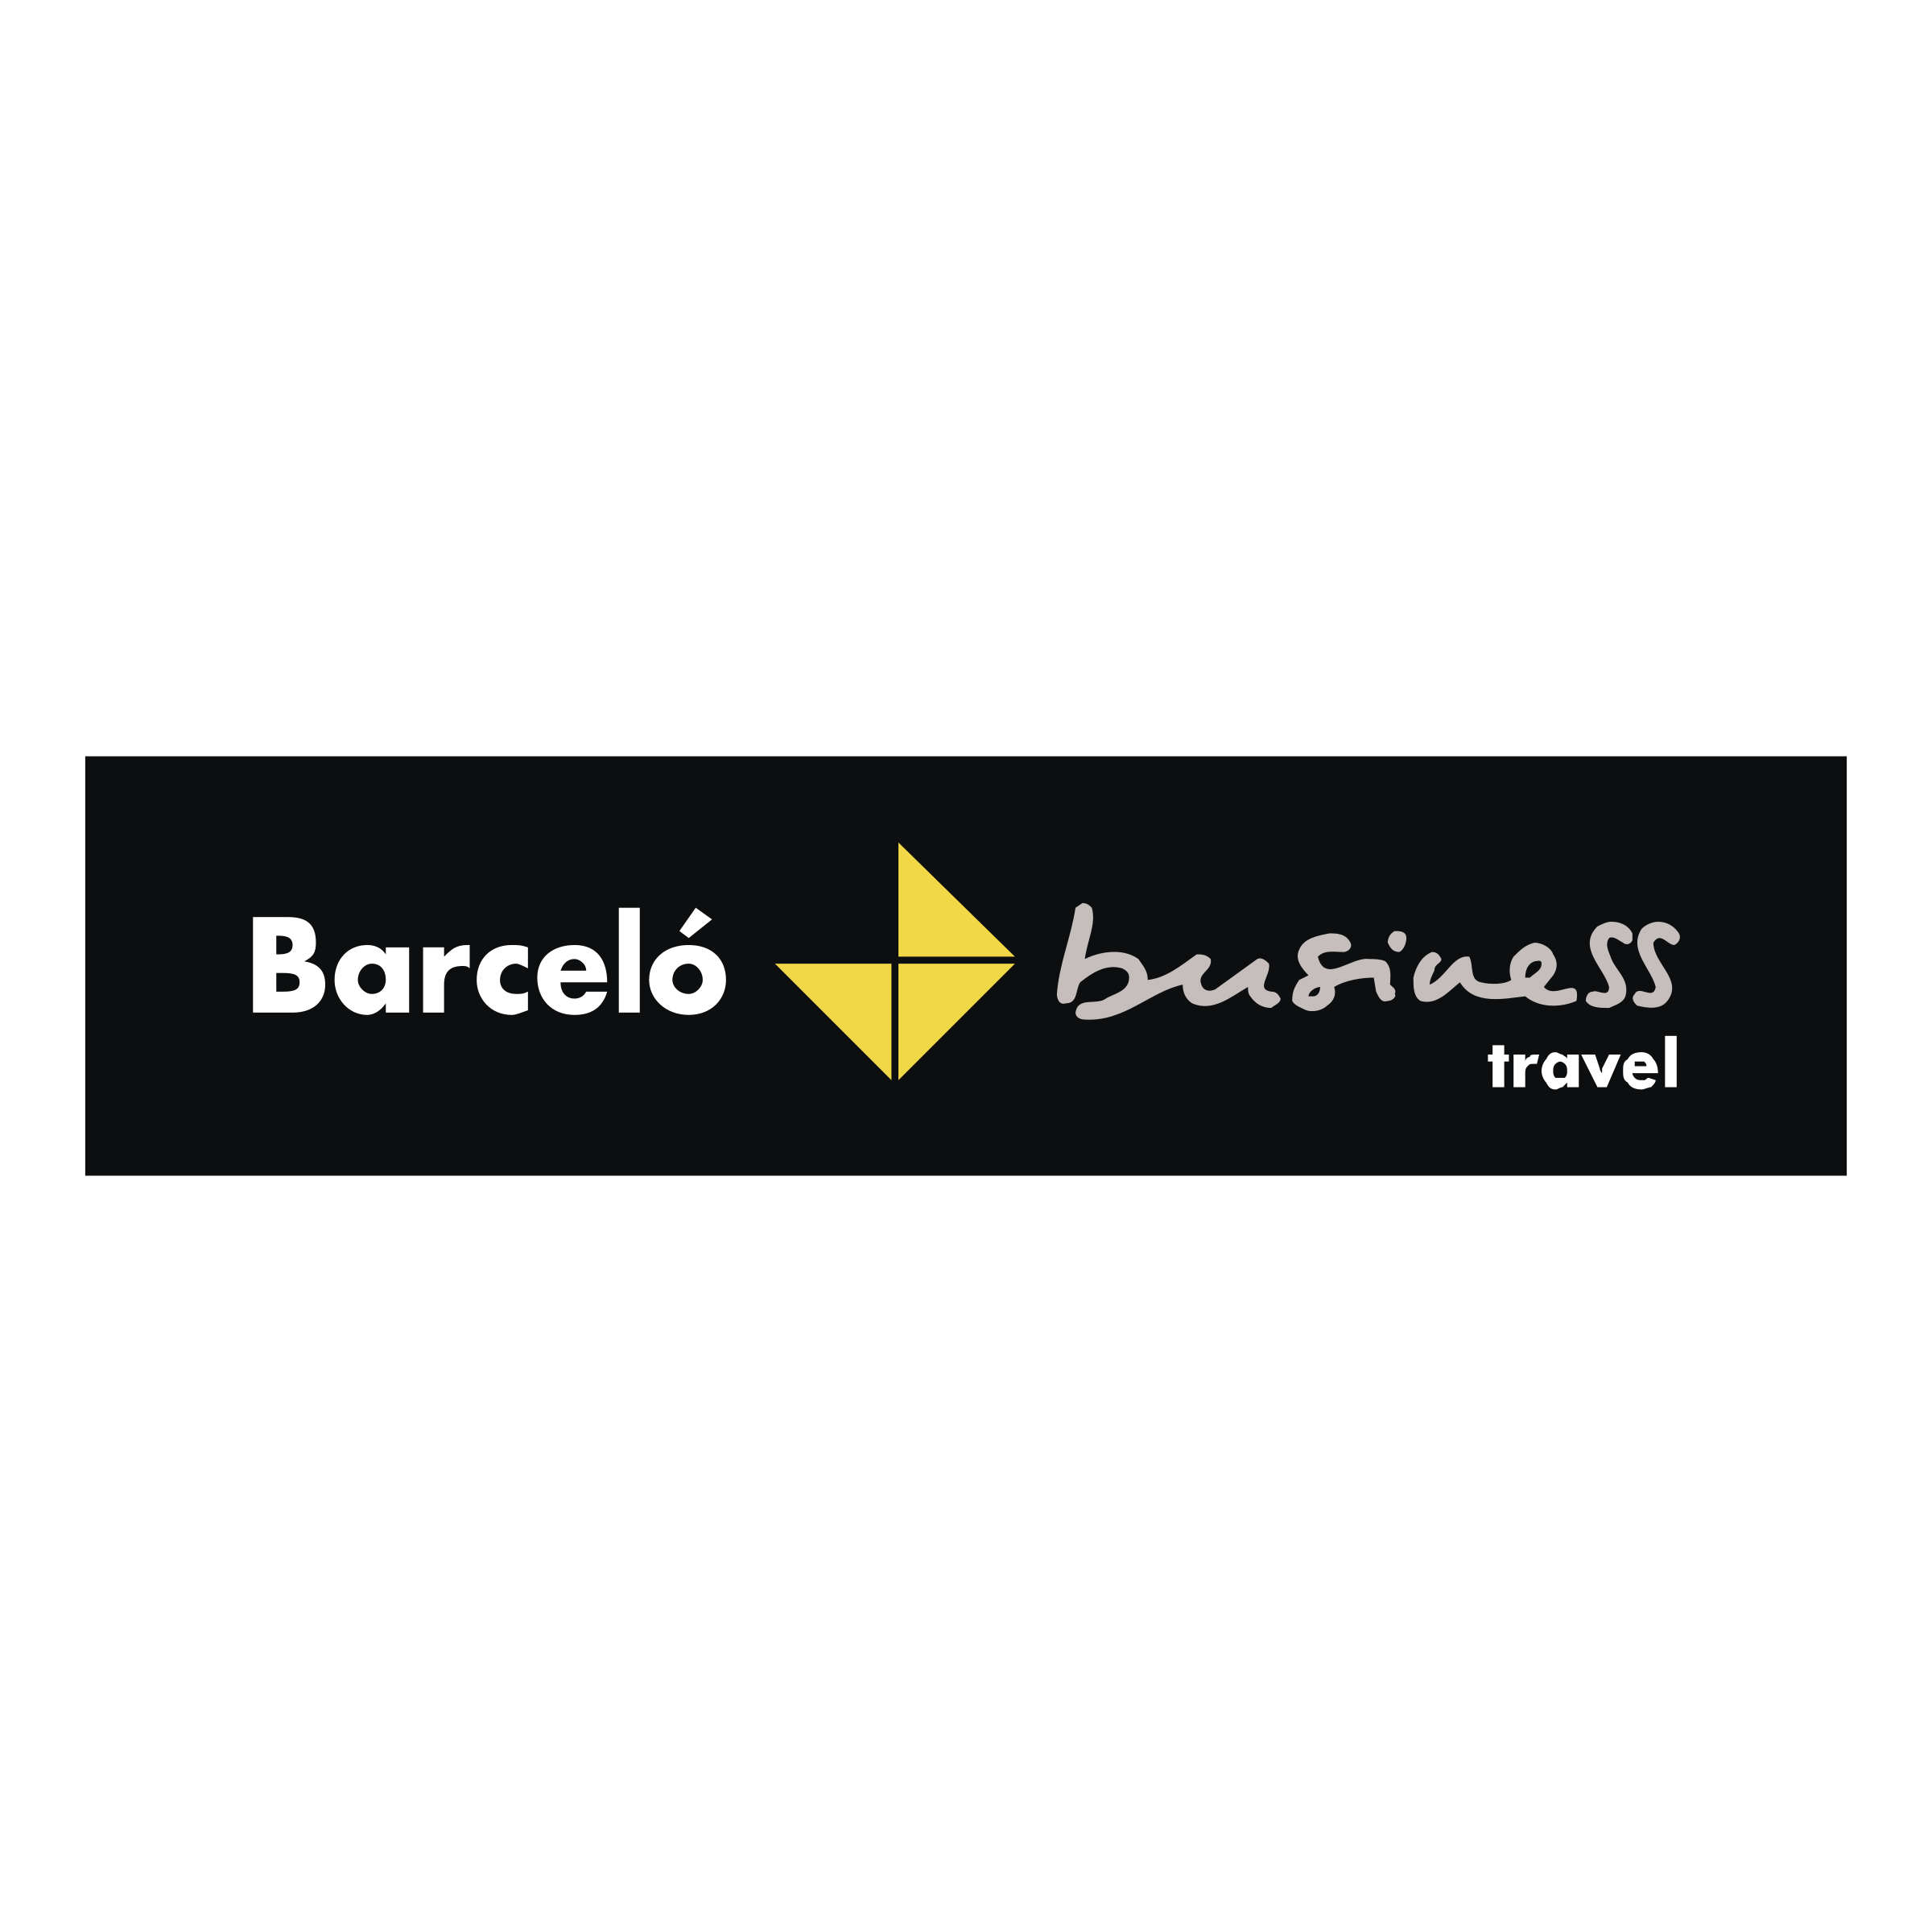 Barcelo Logo - Barcelo Business Travel Logo PNG Transparent & SVG Vector - Freebie ...